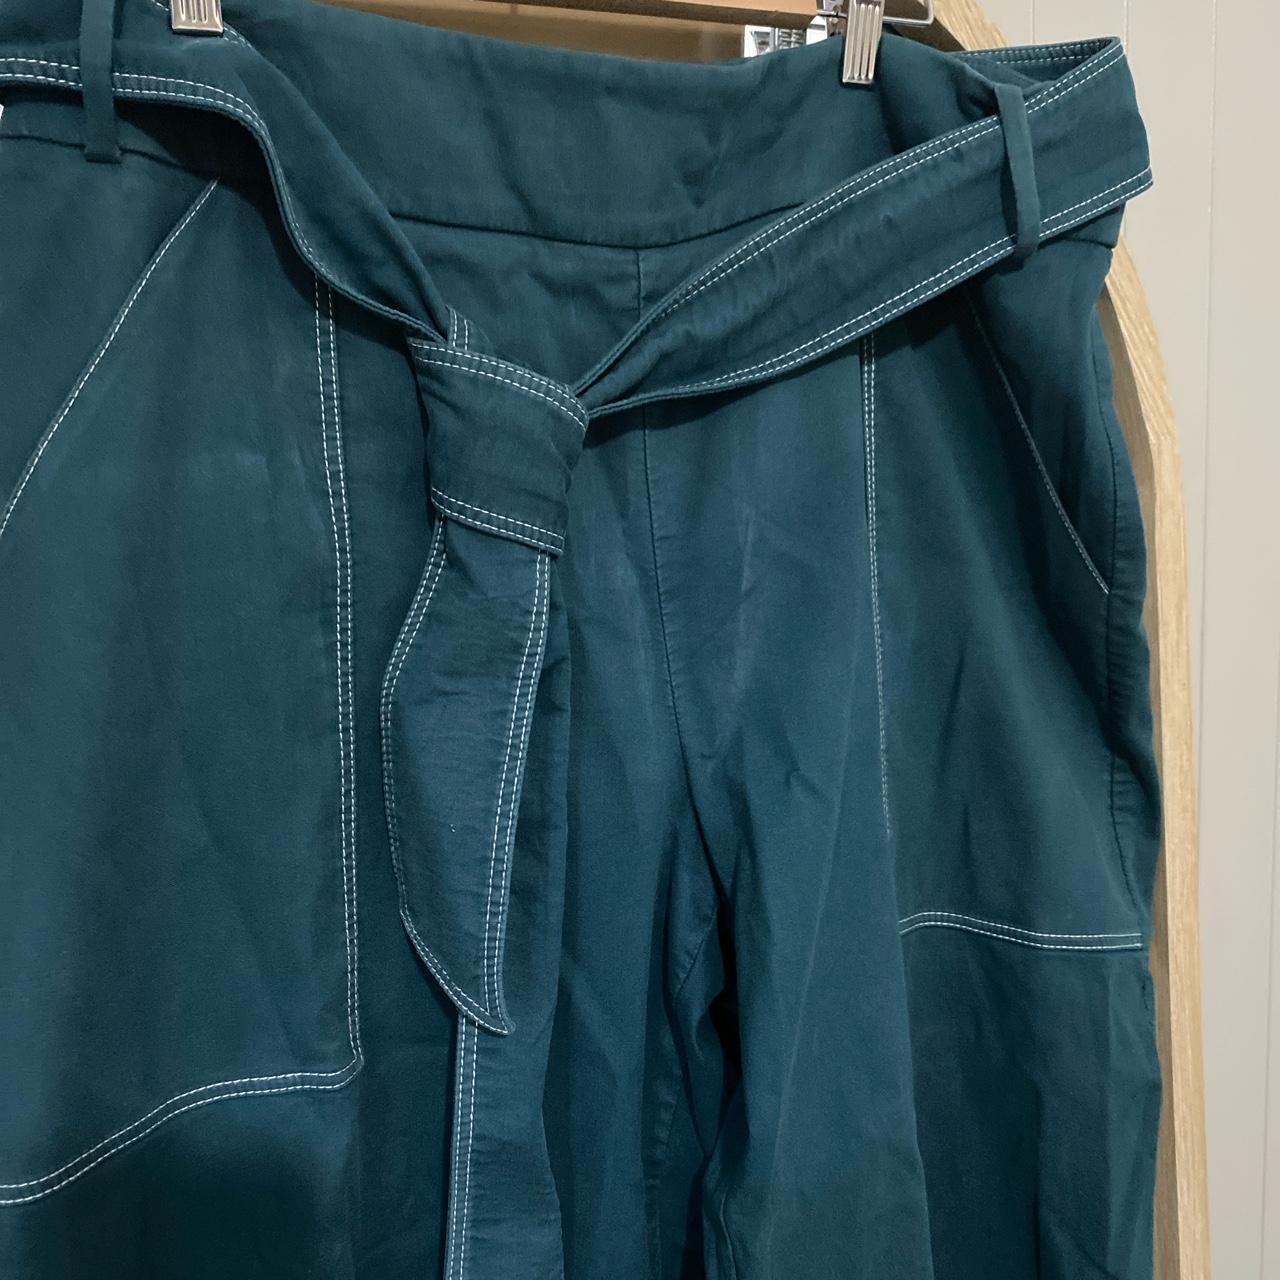 Veronika Maine Green pants with waist tie - Depop